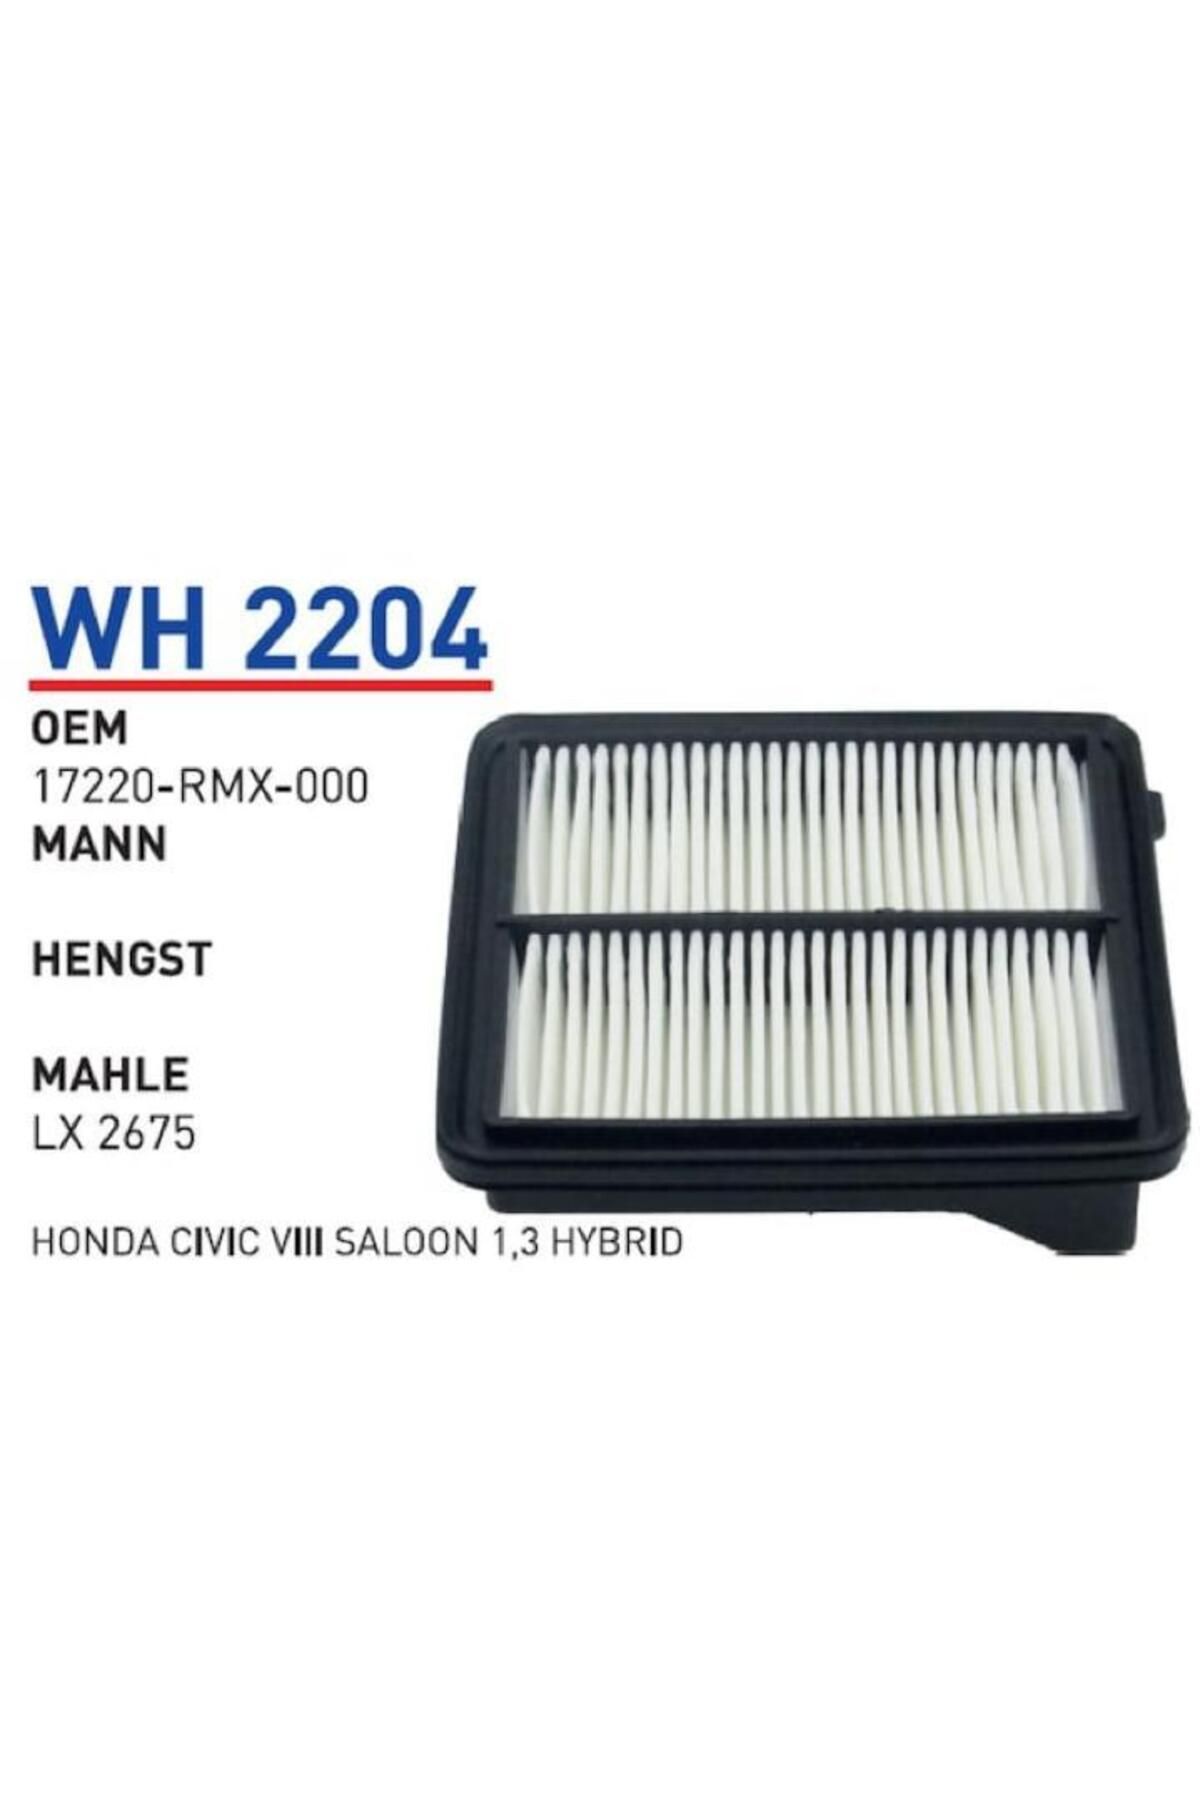 WUNDER Wh 2204 Honda Civic VIII Saloon 1,3 Hybrid 17220